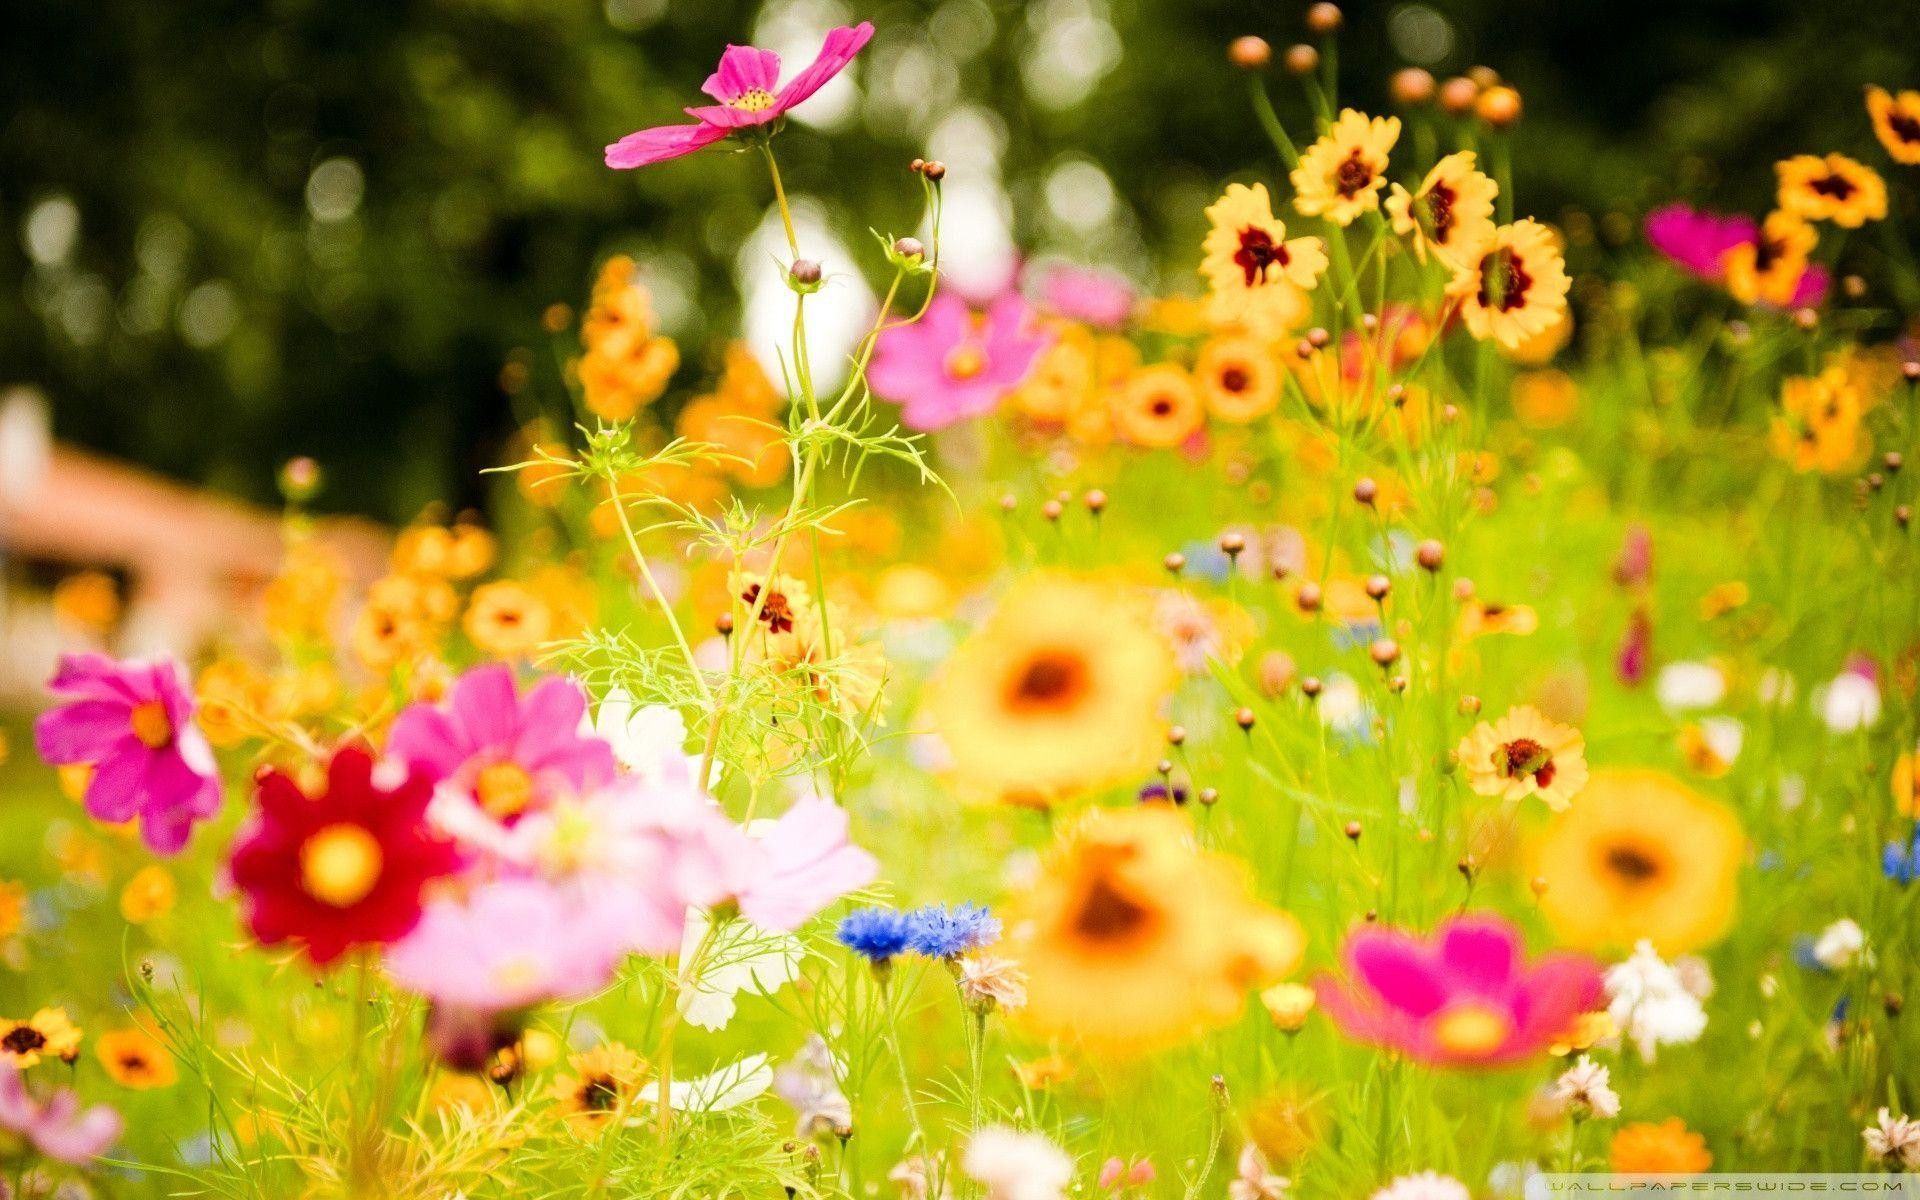 summer flowers backgrounds